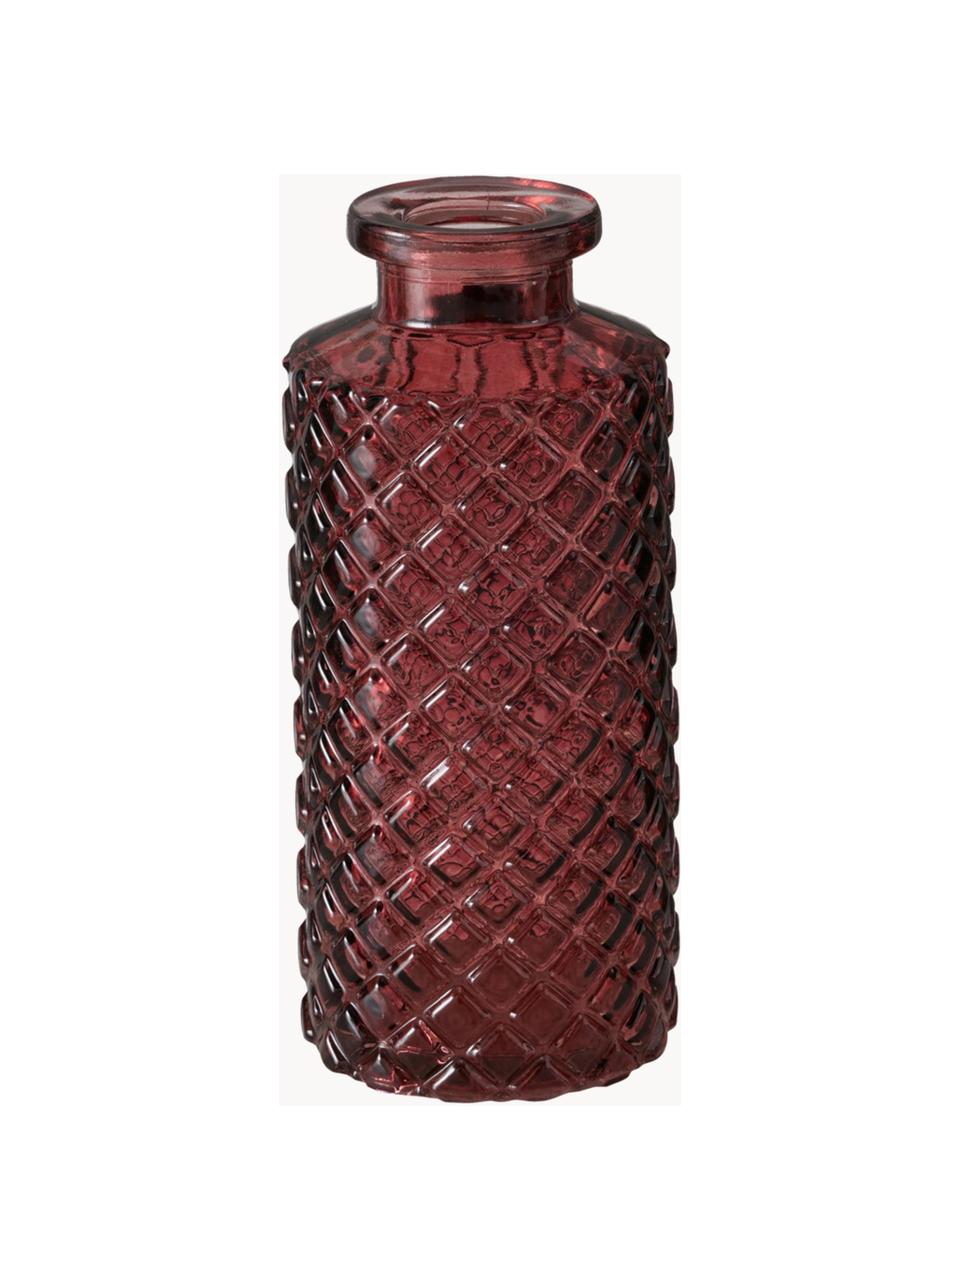 Sada skleněných váz Panja, 4 díly, Sklo, Odstíny růžové, Ø 6 cm, V 14 cm